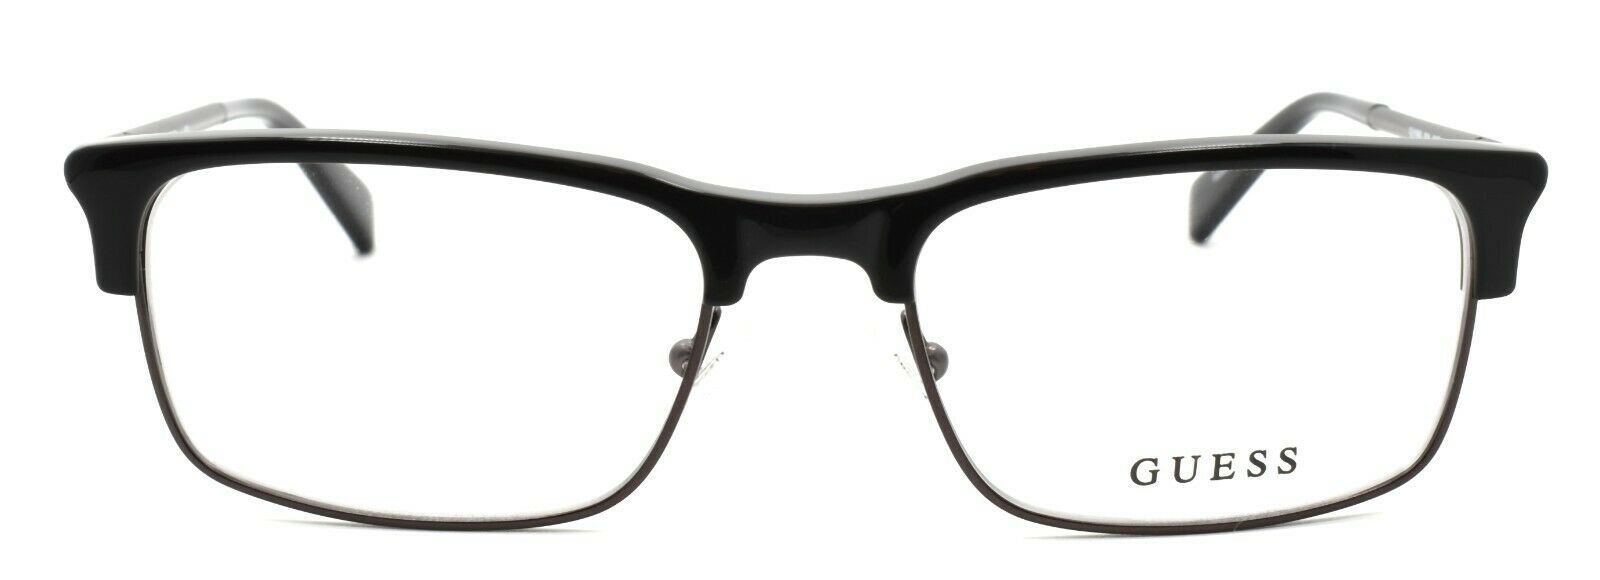 2-GUESS GU1886 001 Men's Eyeglasses Frames 53-18-140 Black + CASE-664689735198-IKSpecs